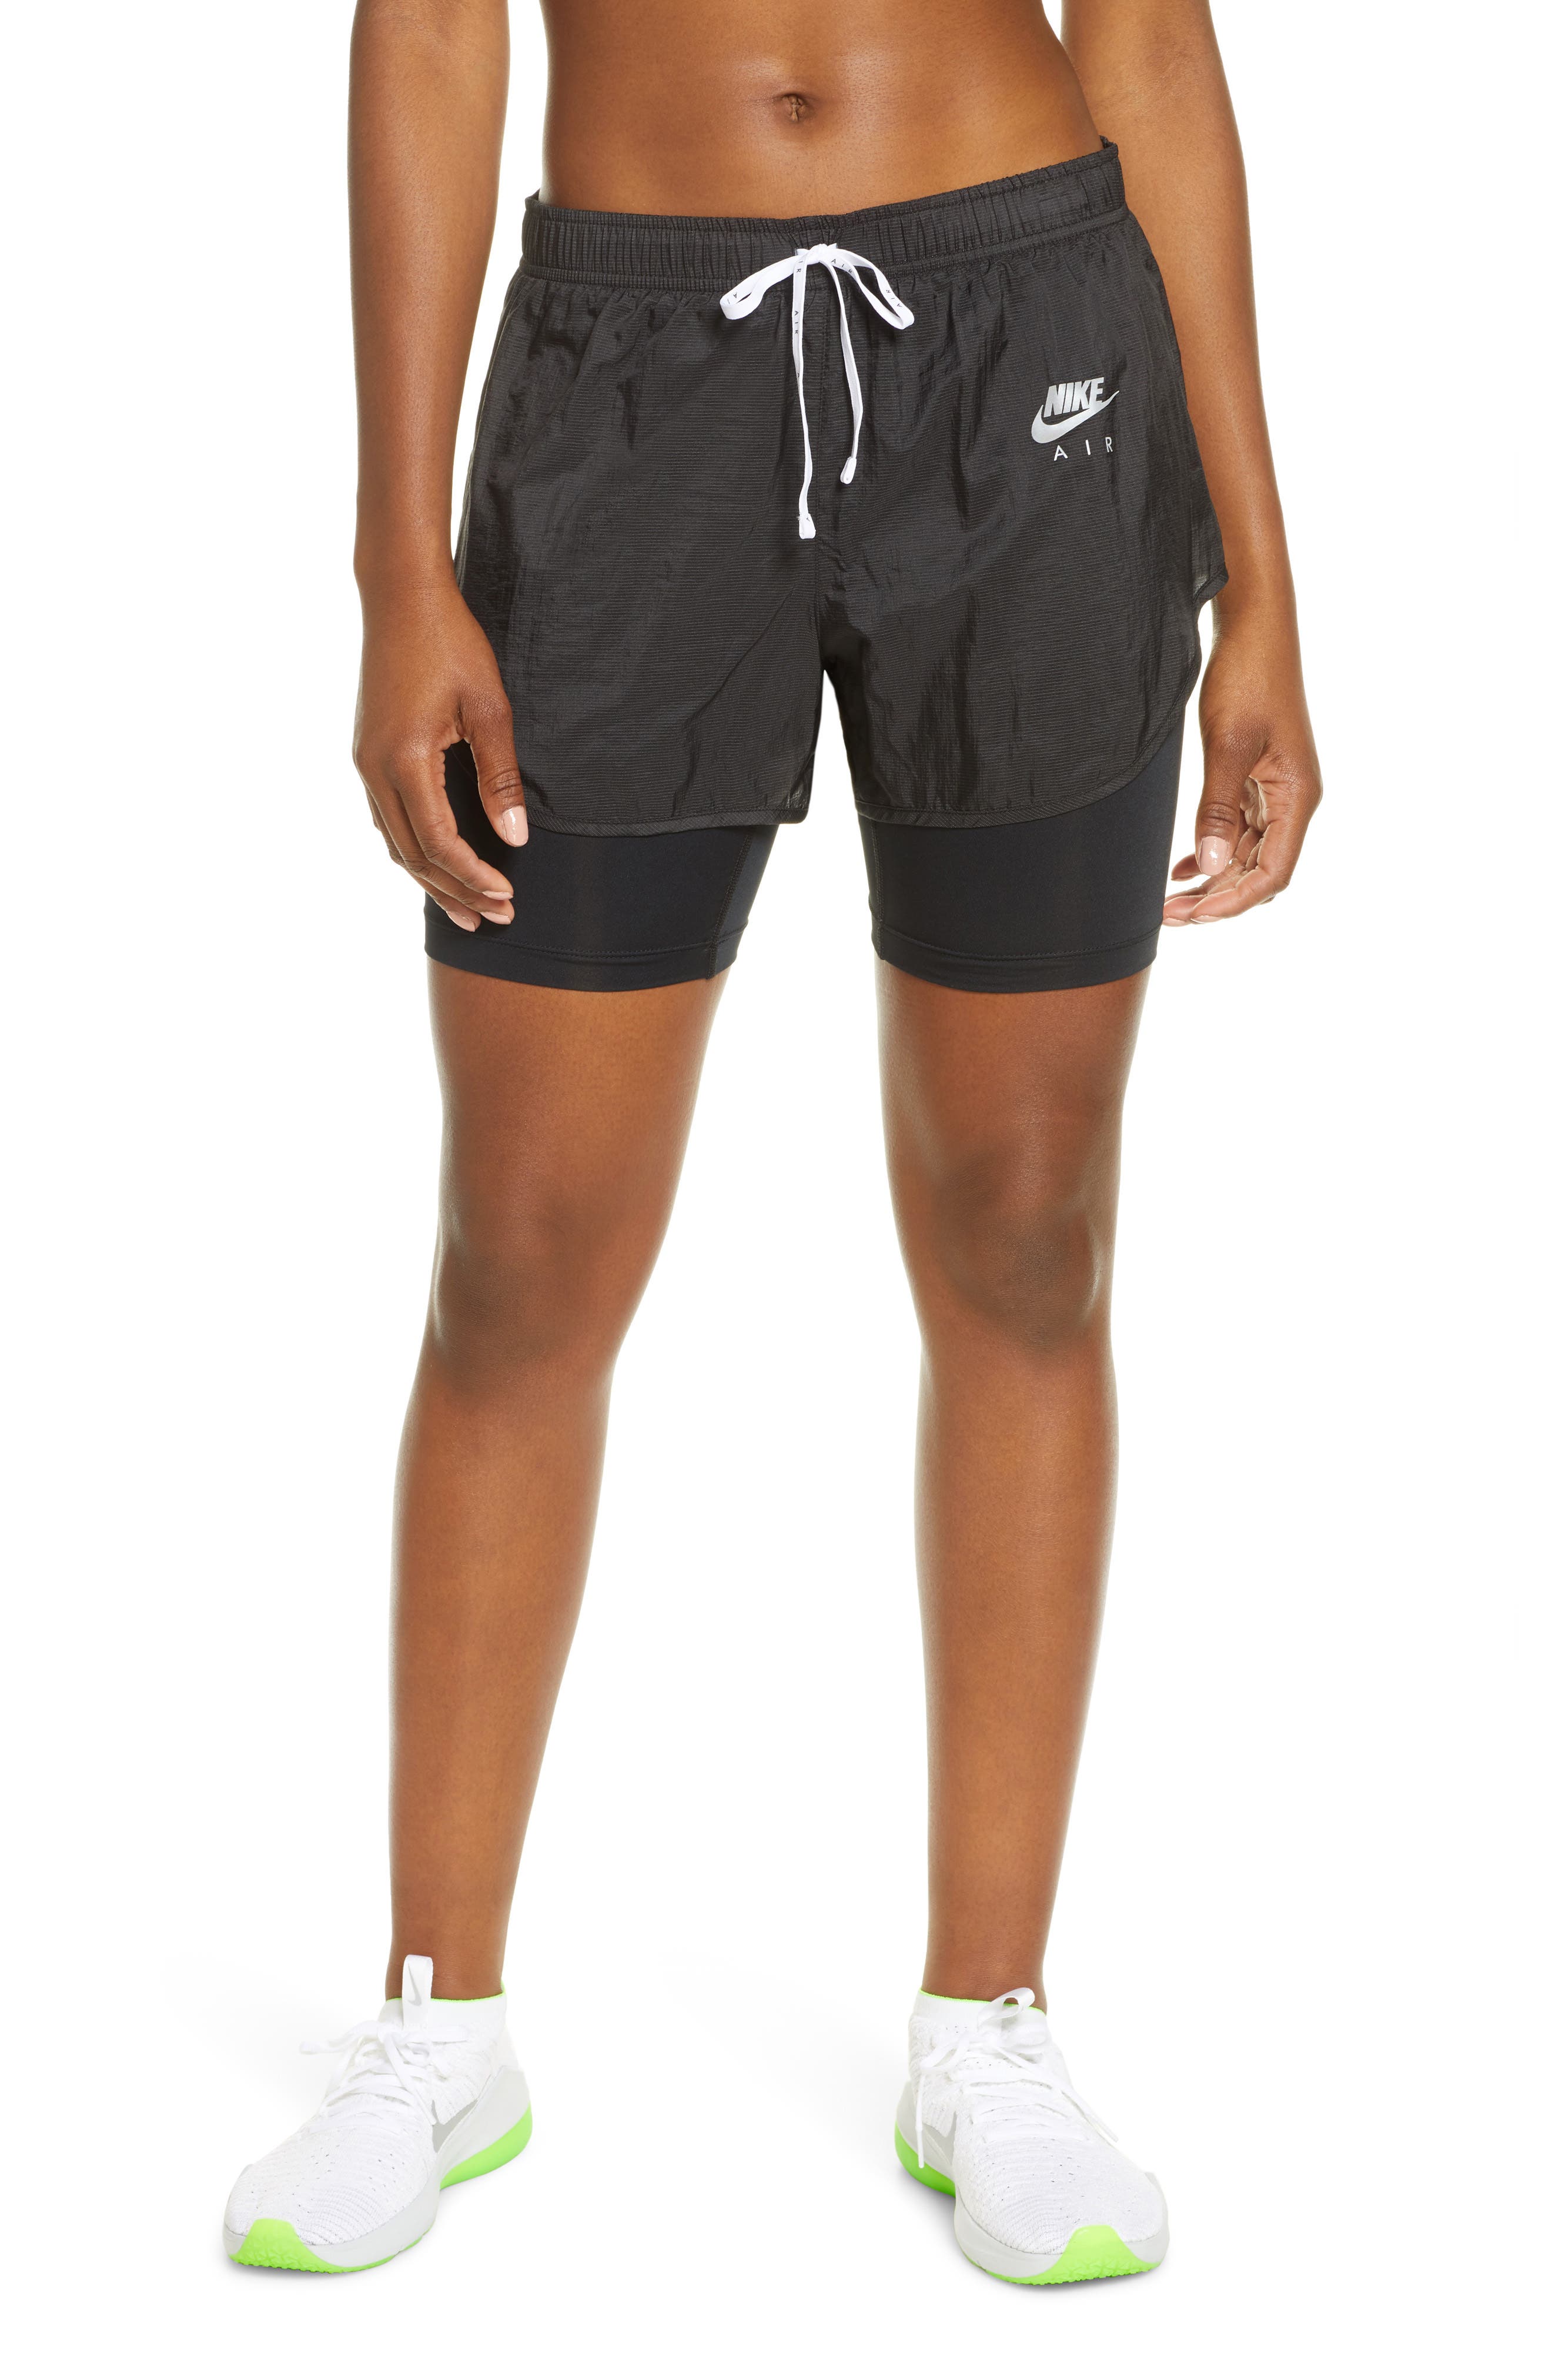 nike 2in1 running shorts women's